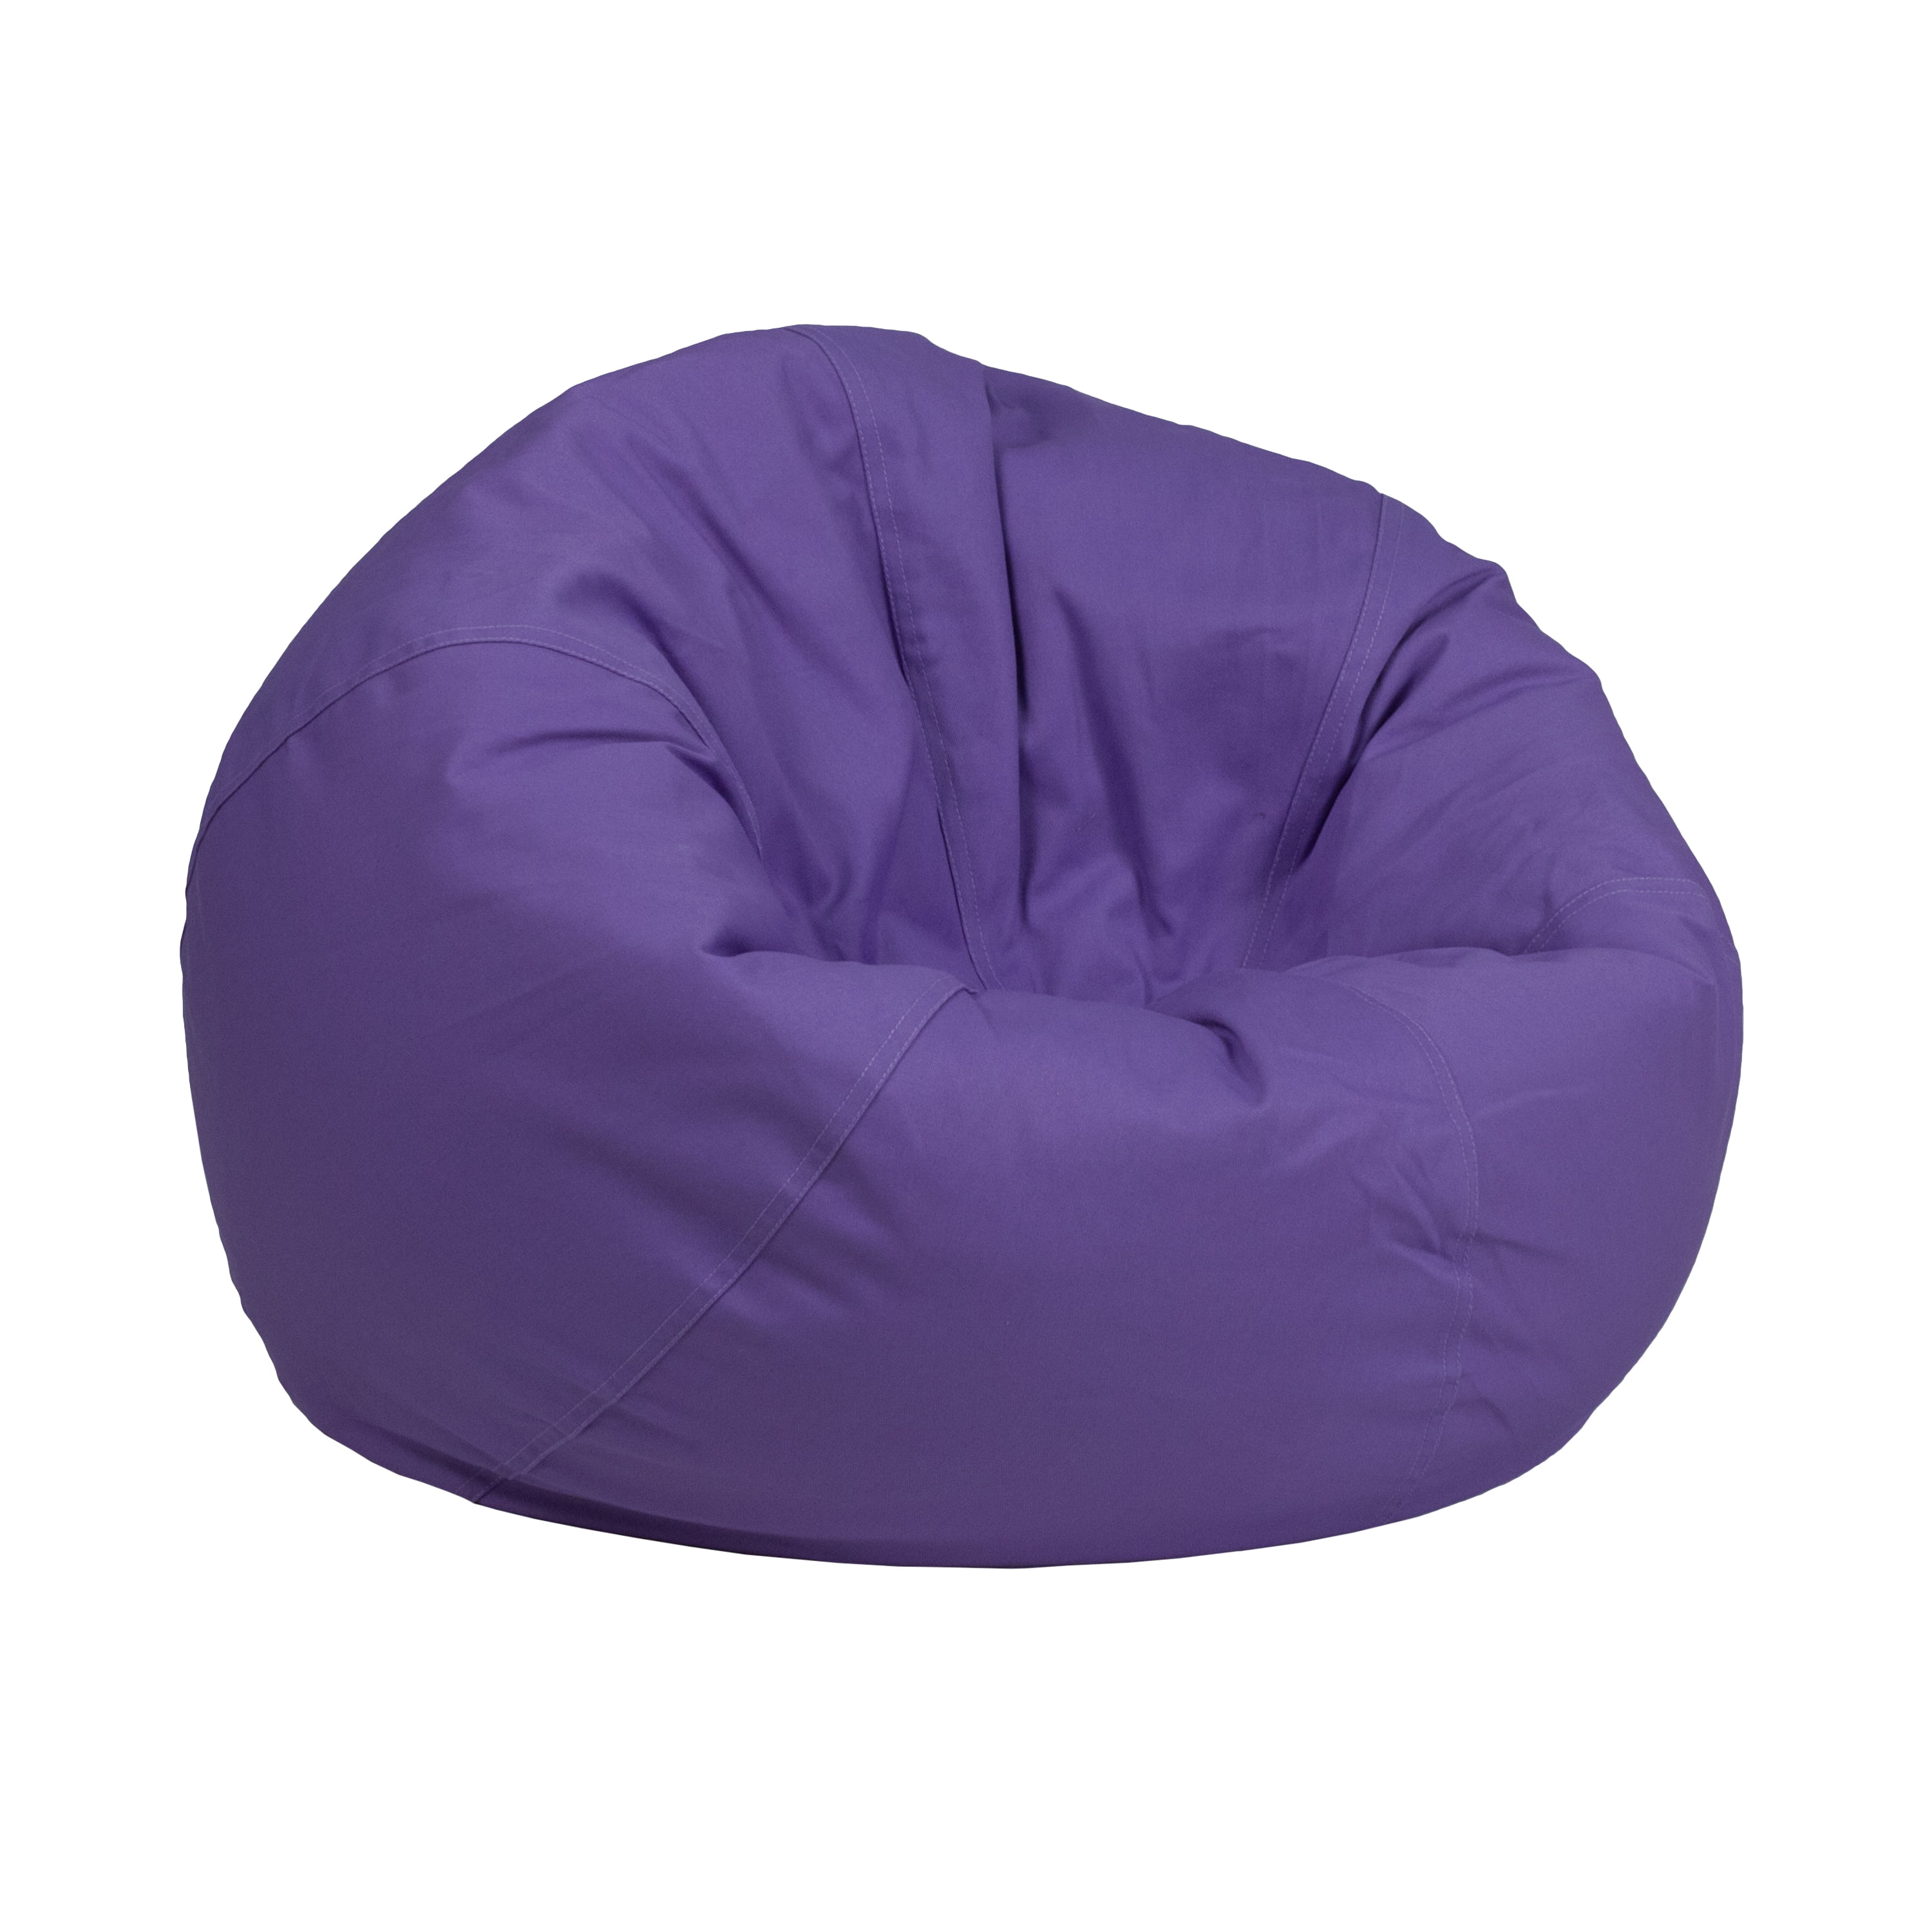 Flash Furniture Small Kids Bean Bag Chair, Multiple Colors - Walmart.com